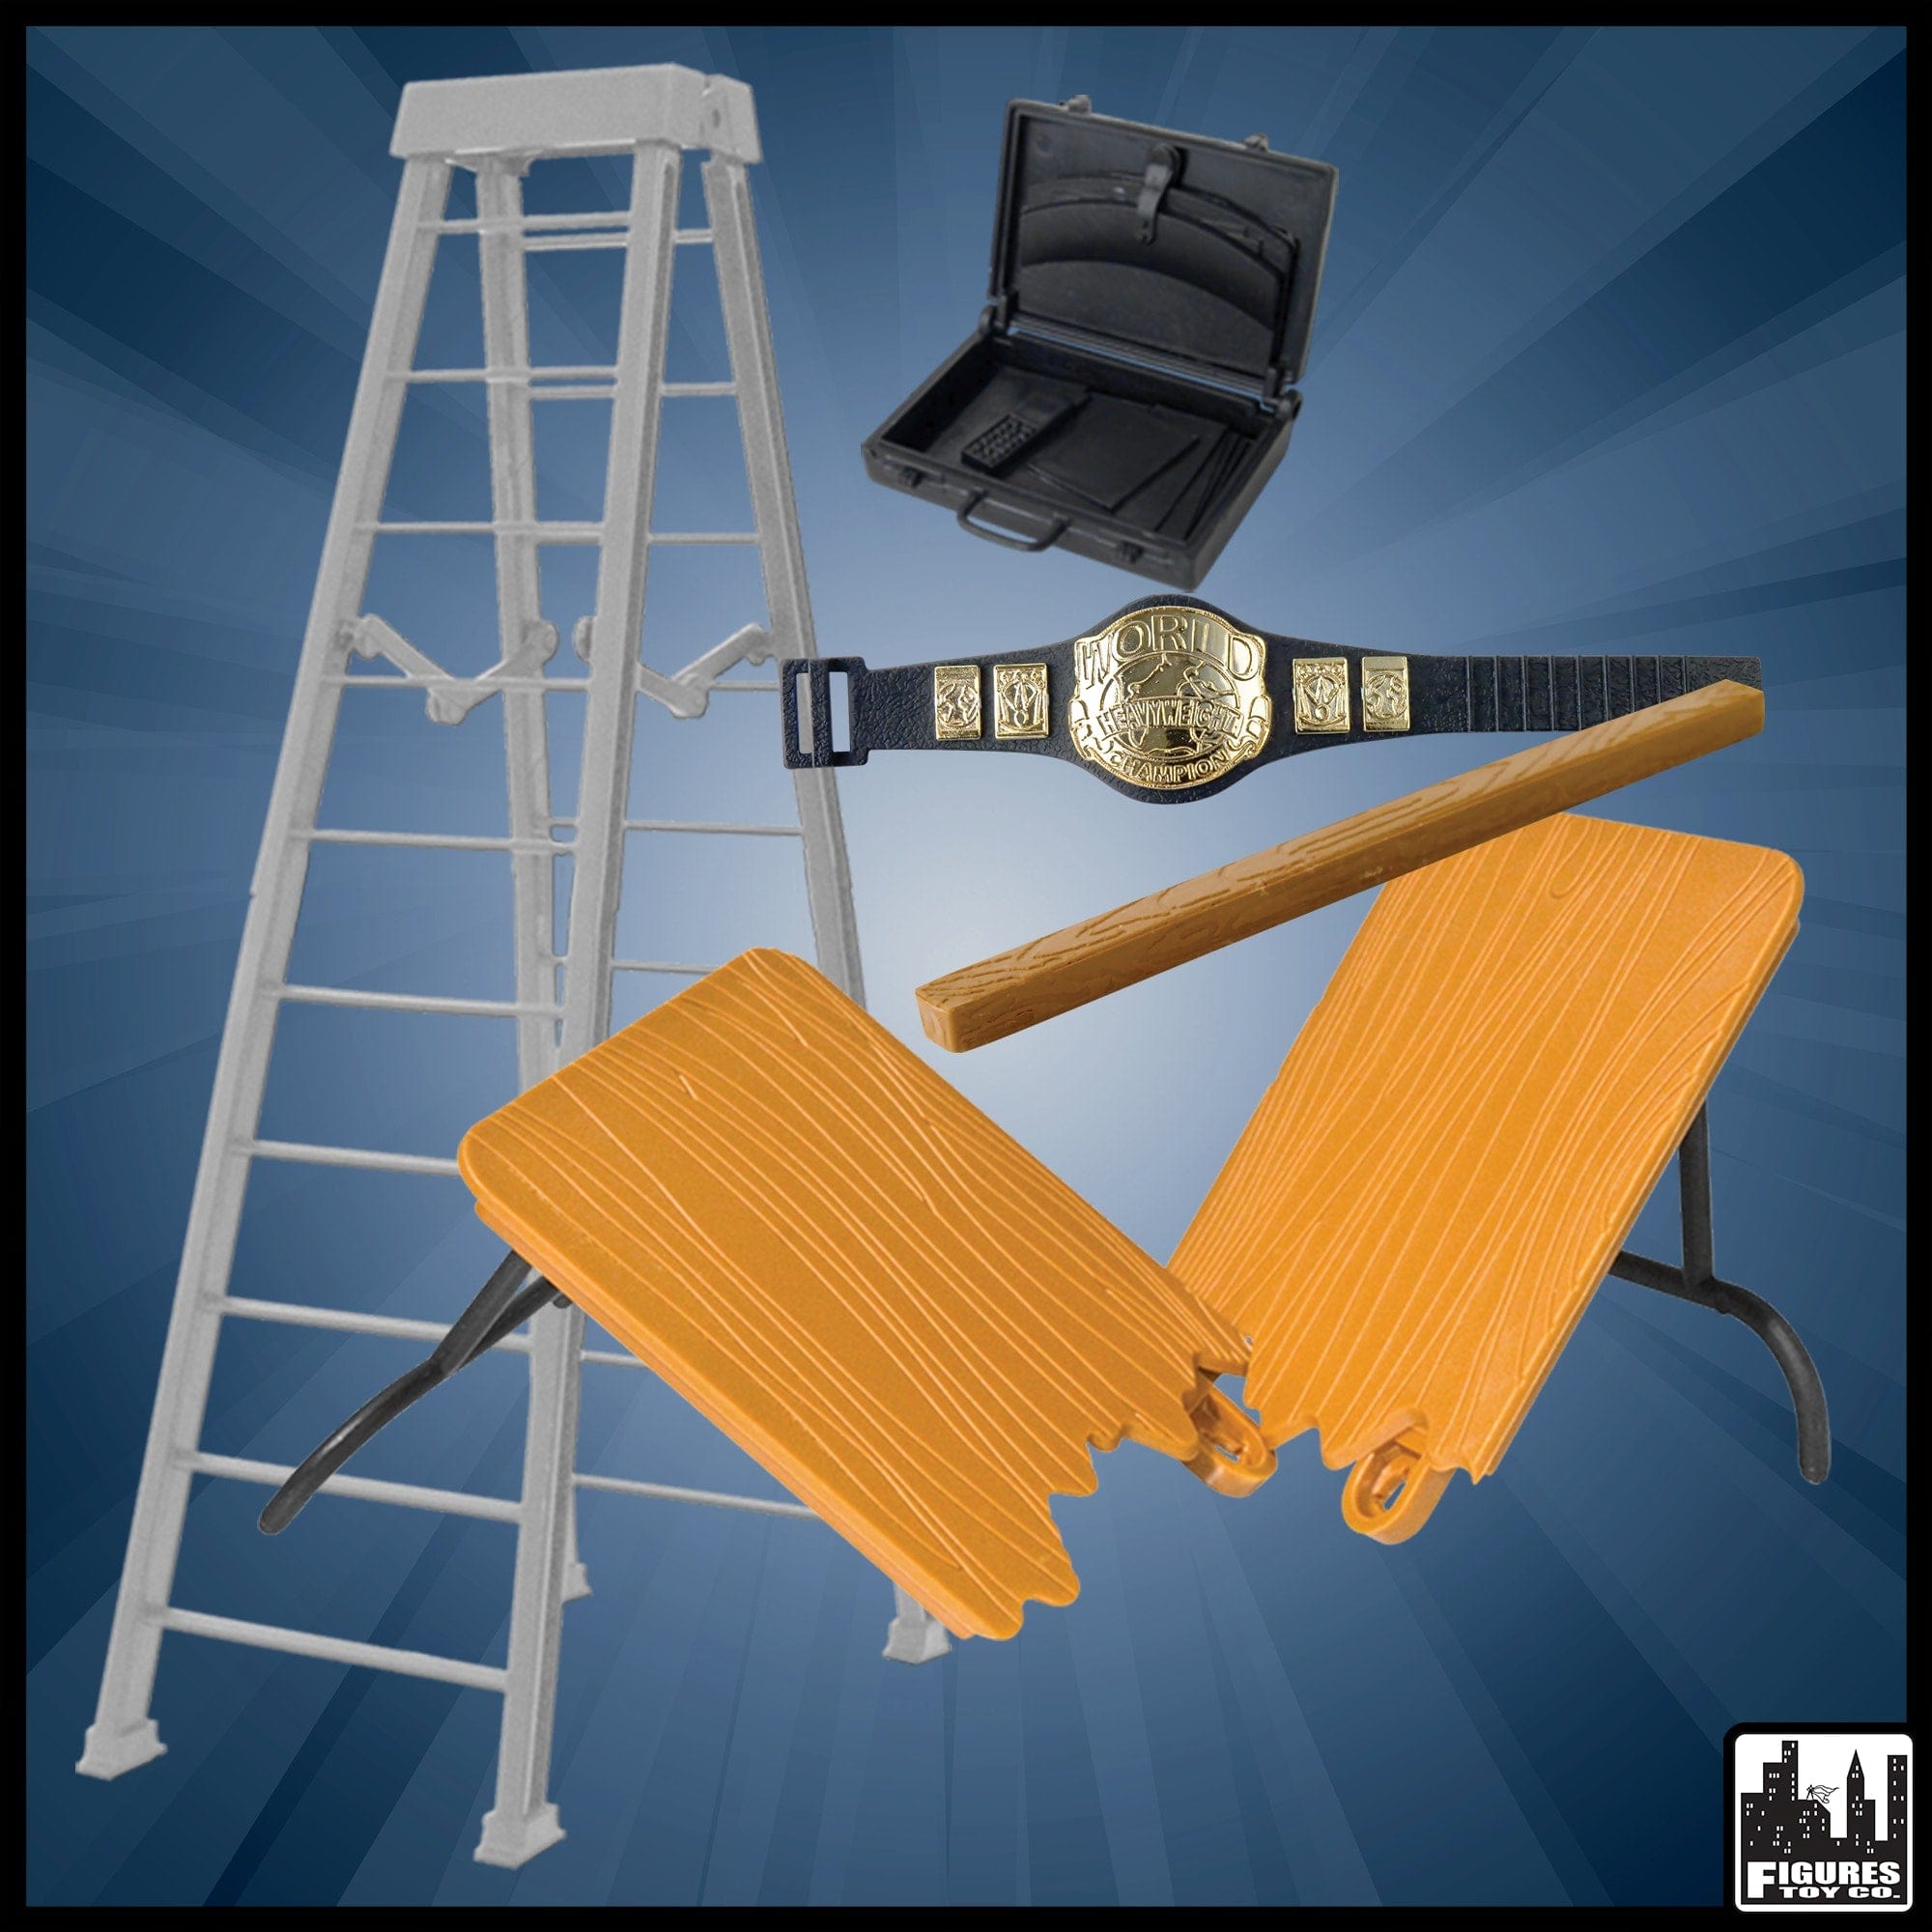 Grab the Cash & Belt 5 Piece Special Deal for WWE Wrestling Action Figures